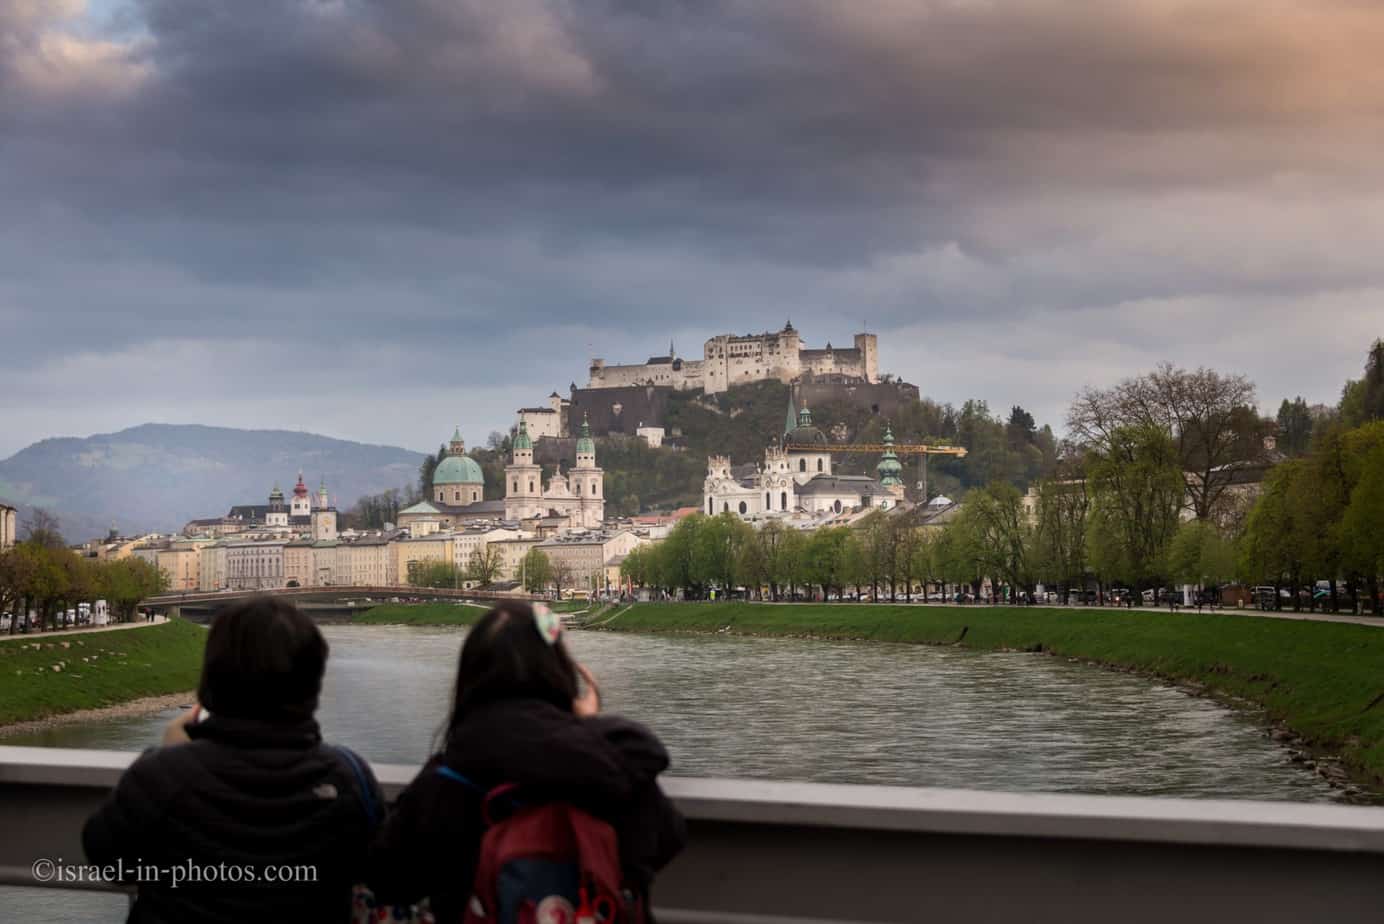 View of Fortress Hohensalzburg and Salzach river in Salzburg, Austria